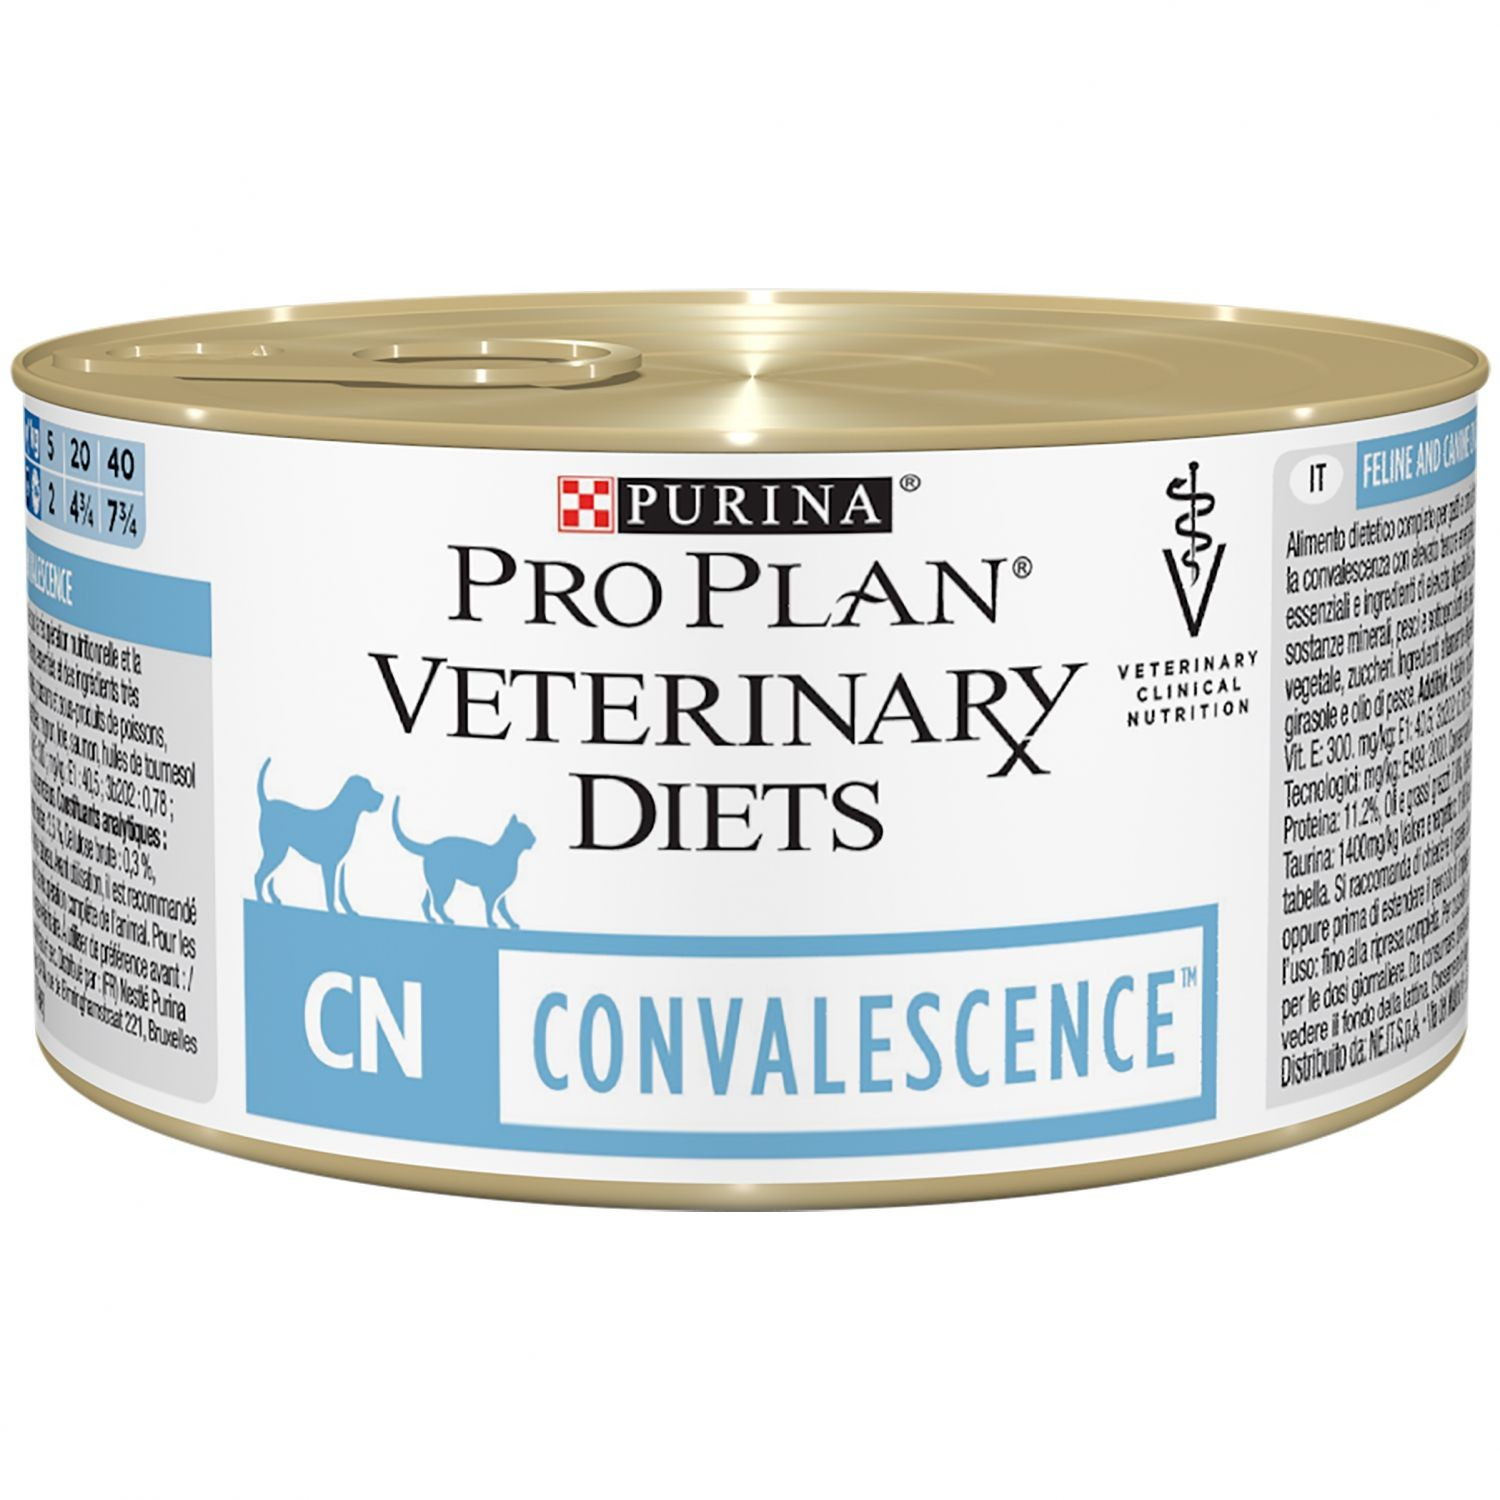 Pro Plan Veterinary Diets CN Convalescence - 195g